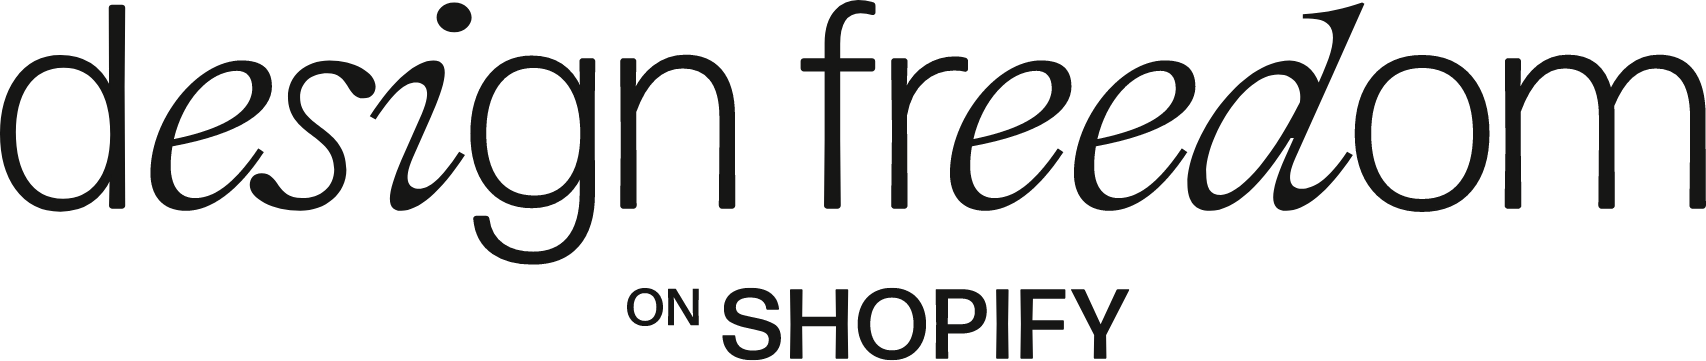 Design Freedom on Shopify logo